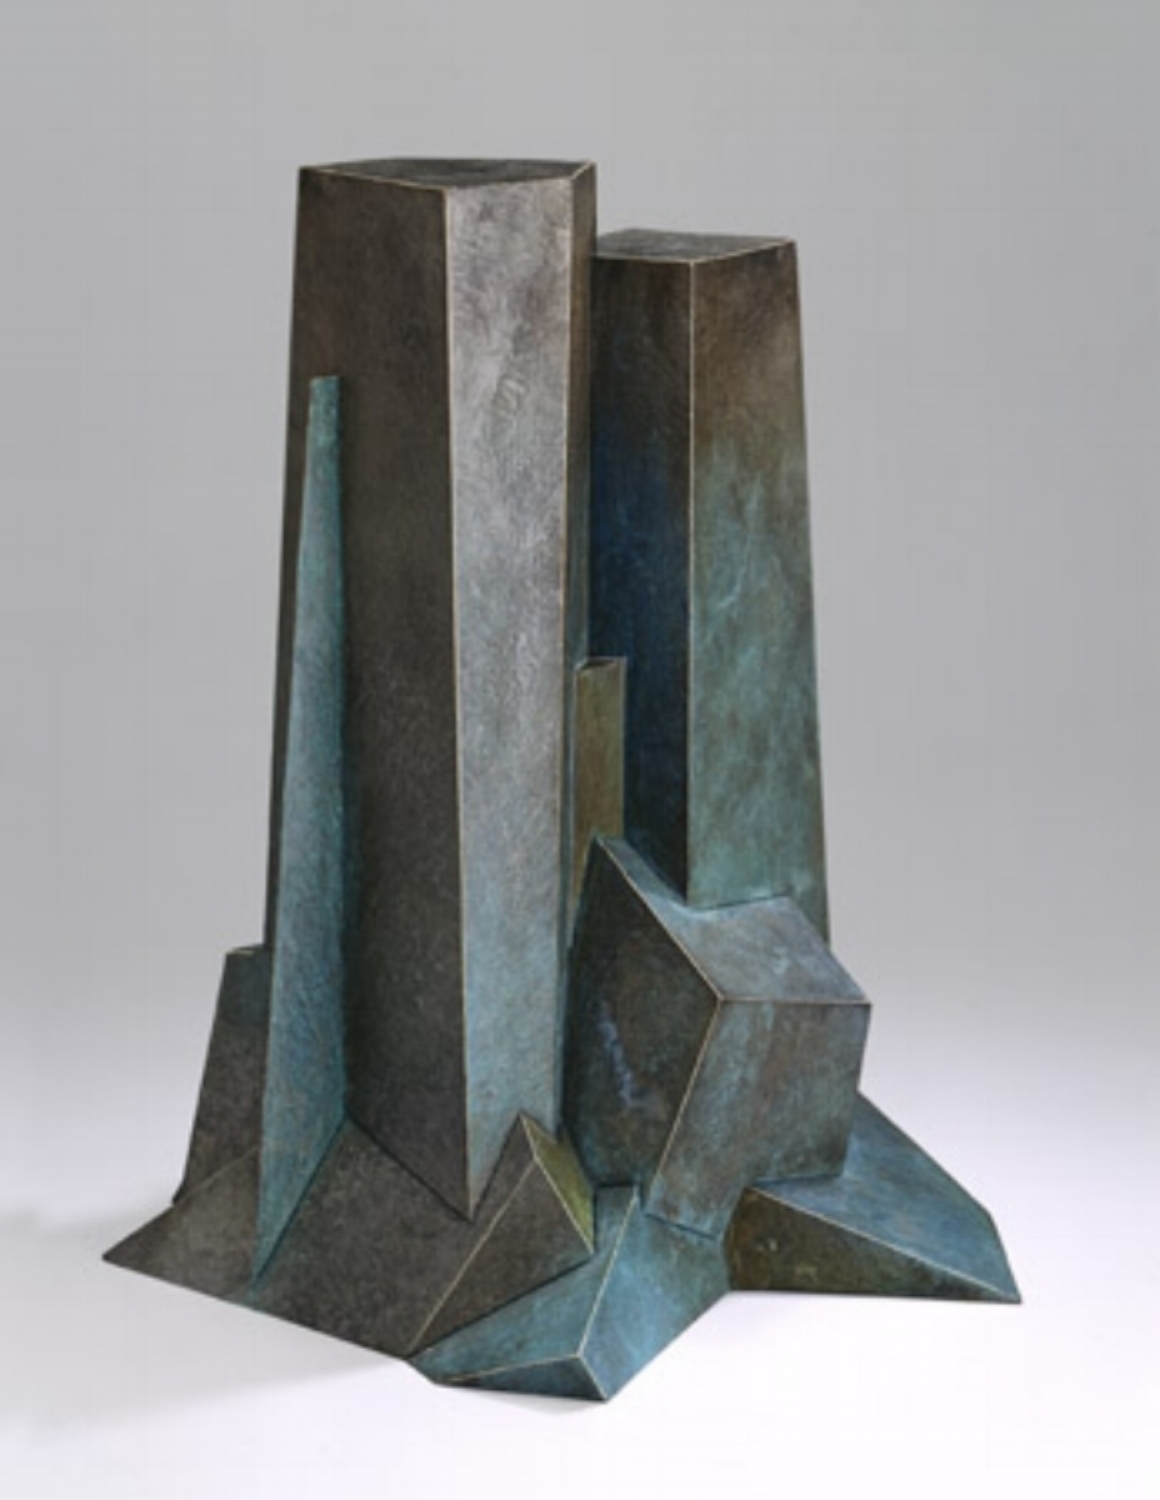  Bruce Beasley,&nbsp; Upthrust , 1993, cast bronze with patina 4/9, 19 x 16 x 13 